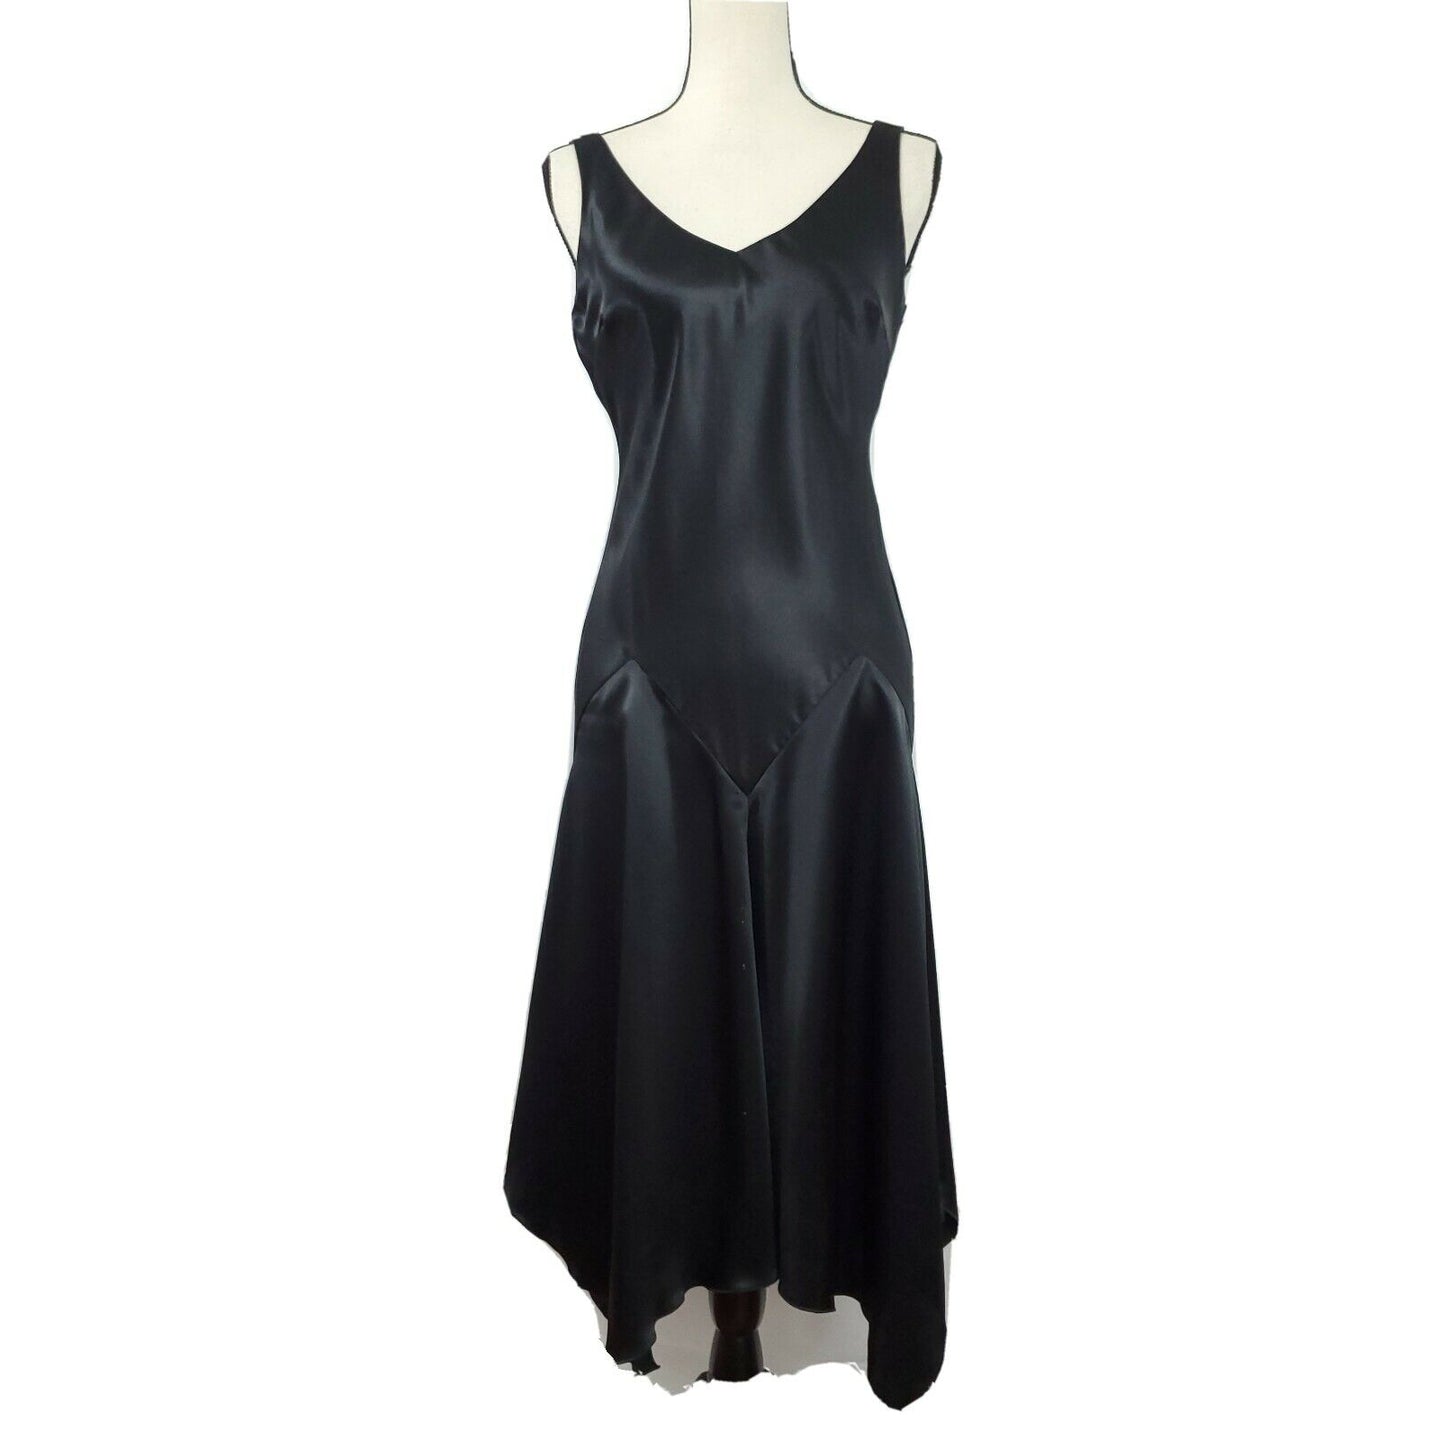 90s Black Satin Dress Size 6P